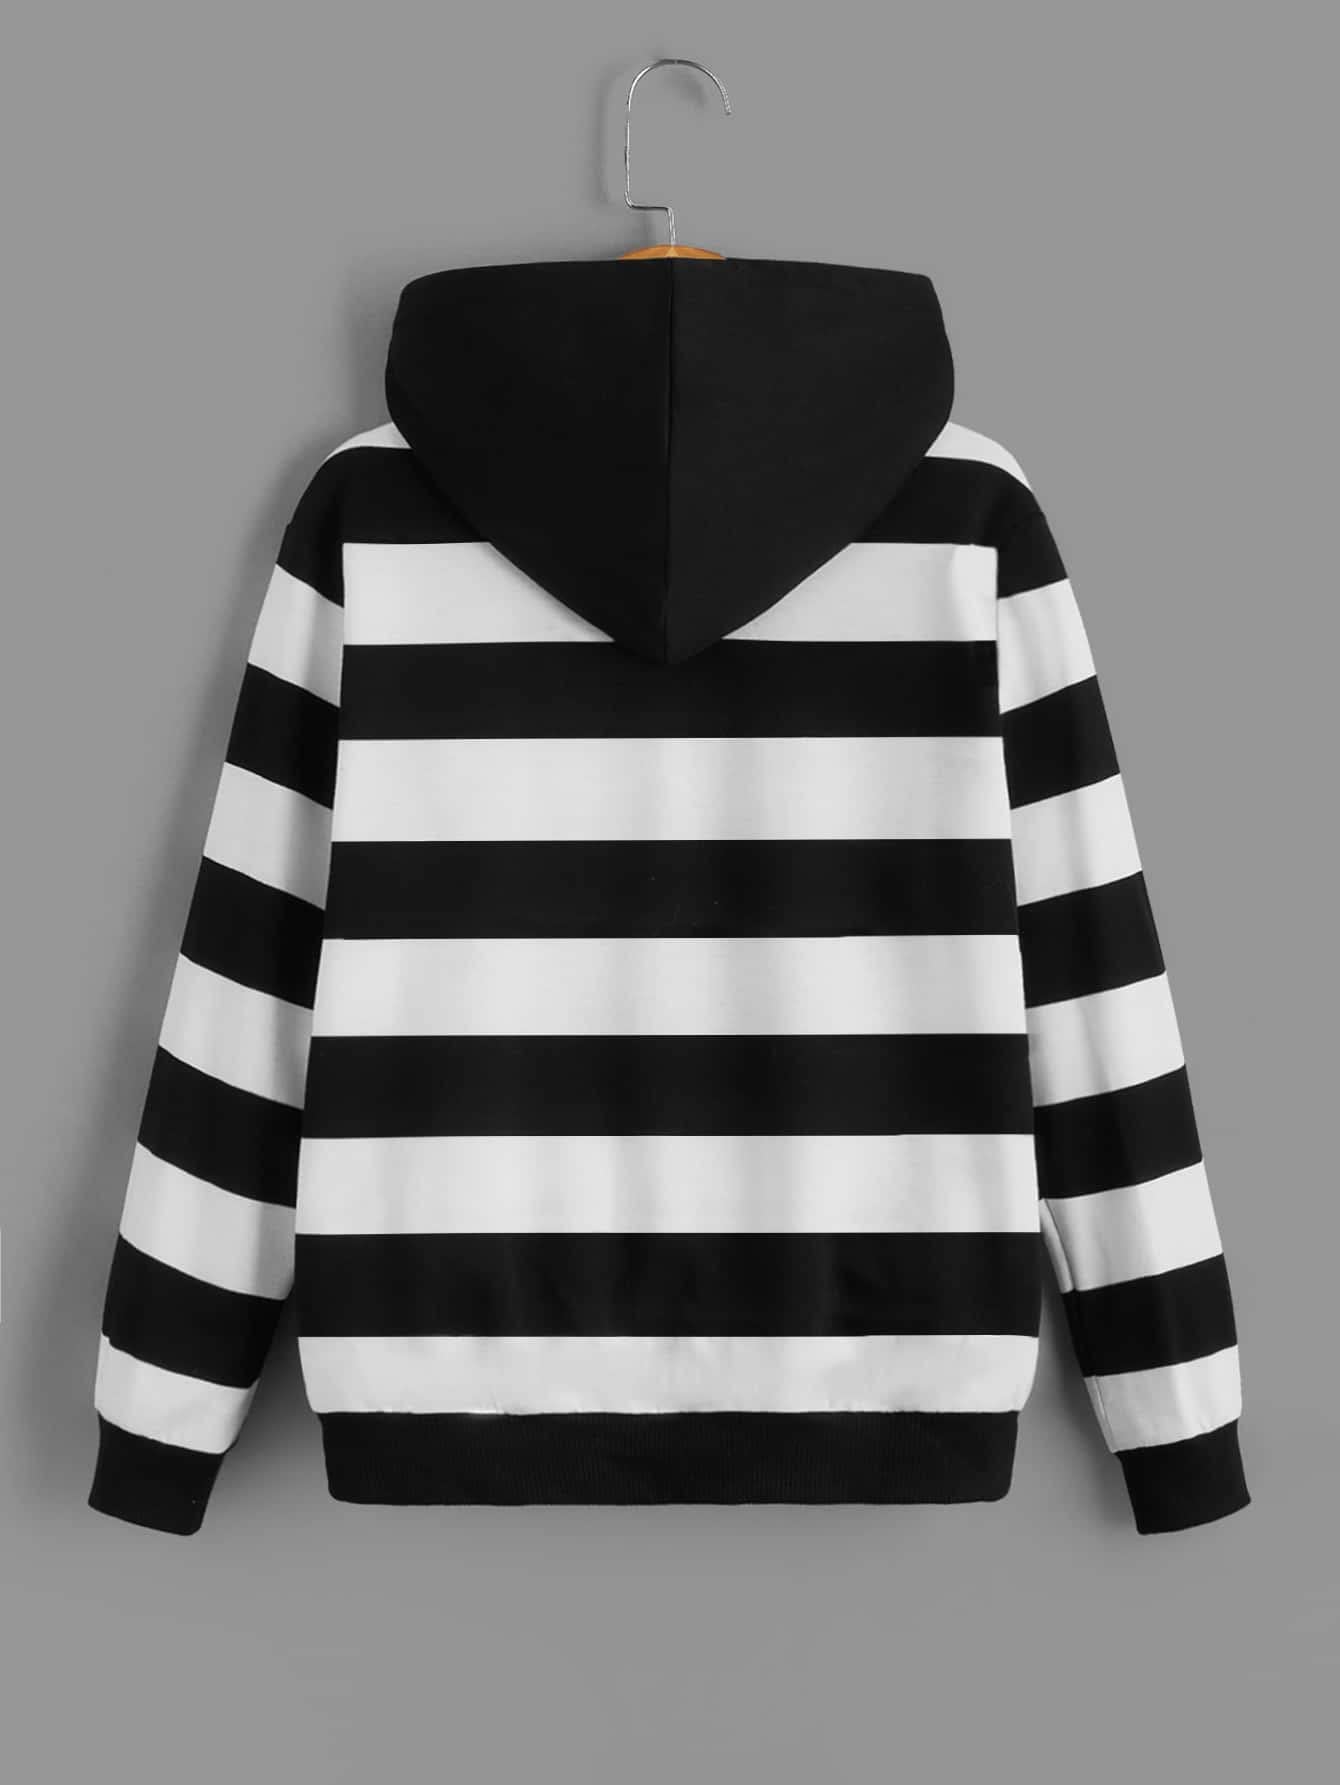 SHENHE Boy's Striped Color Block Long Sleeve Hooded Sweatshirt Hoodie Tops with Pocket